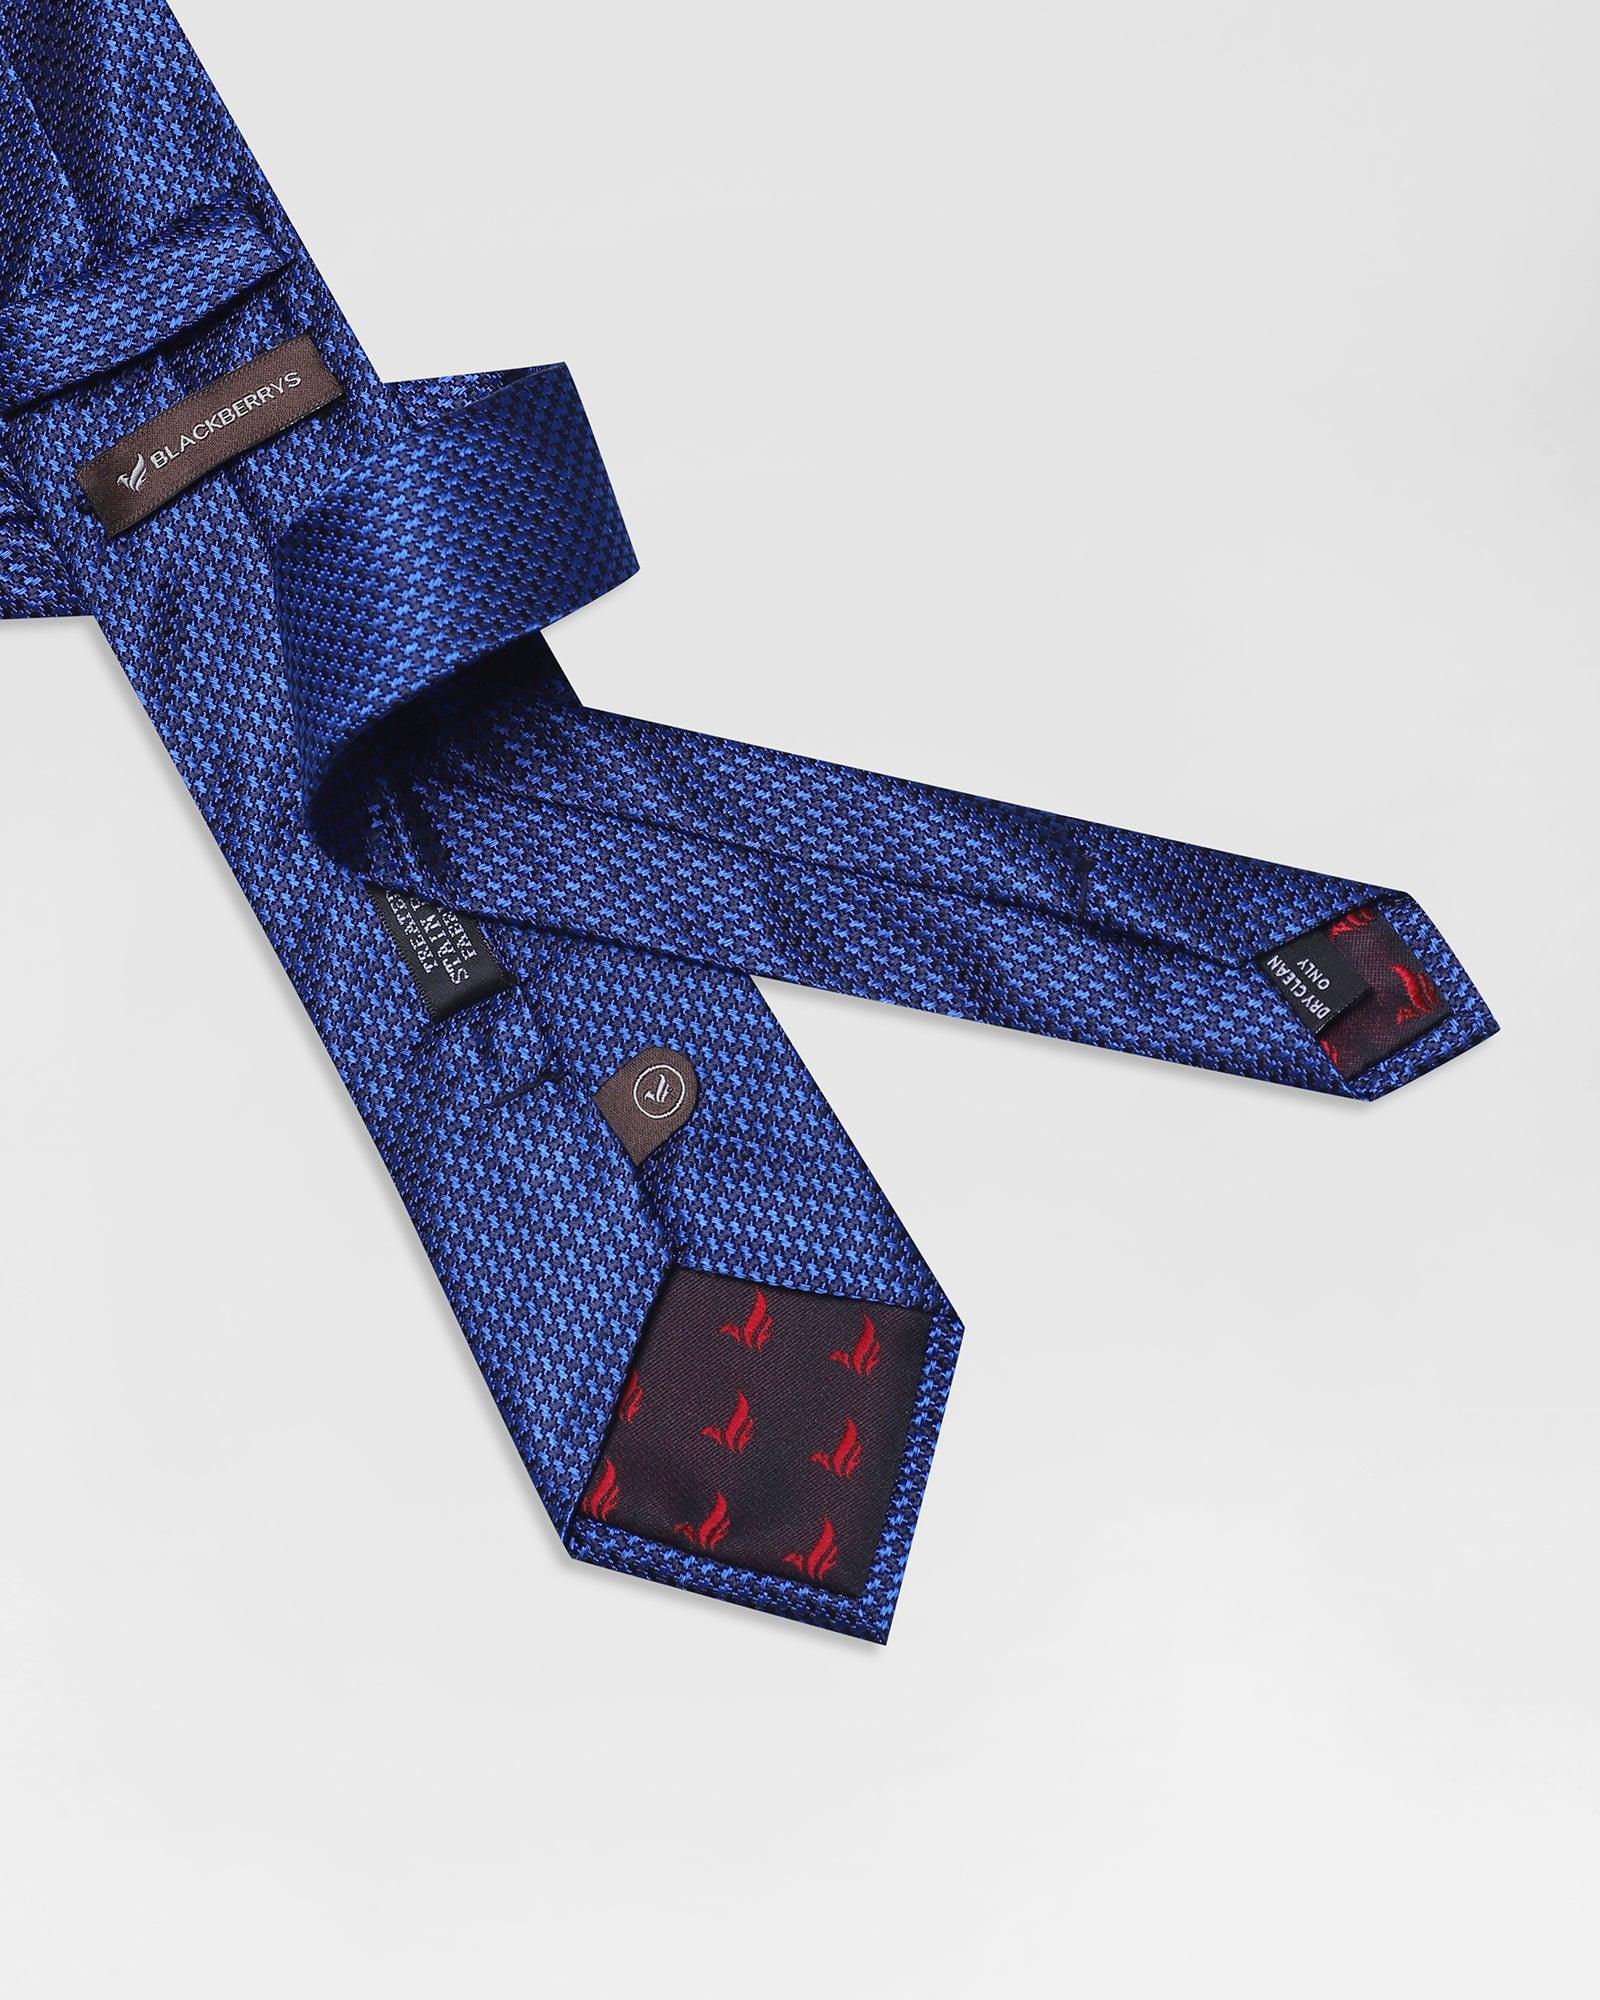 Silk Royal Blue Textured Tie - Robin